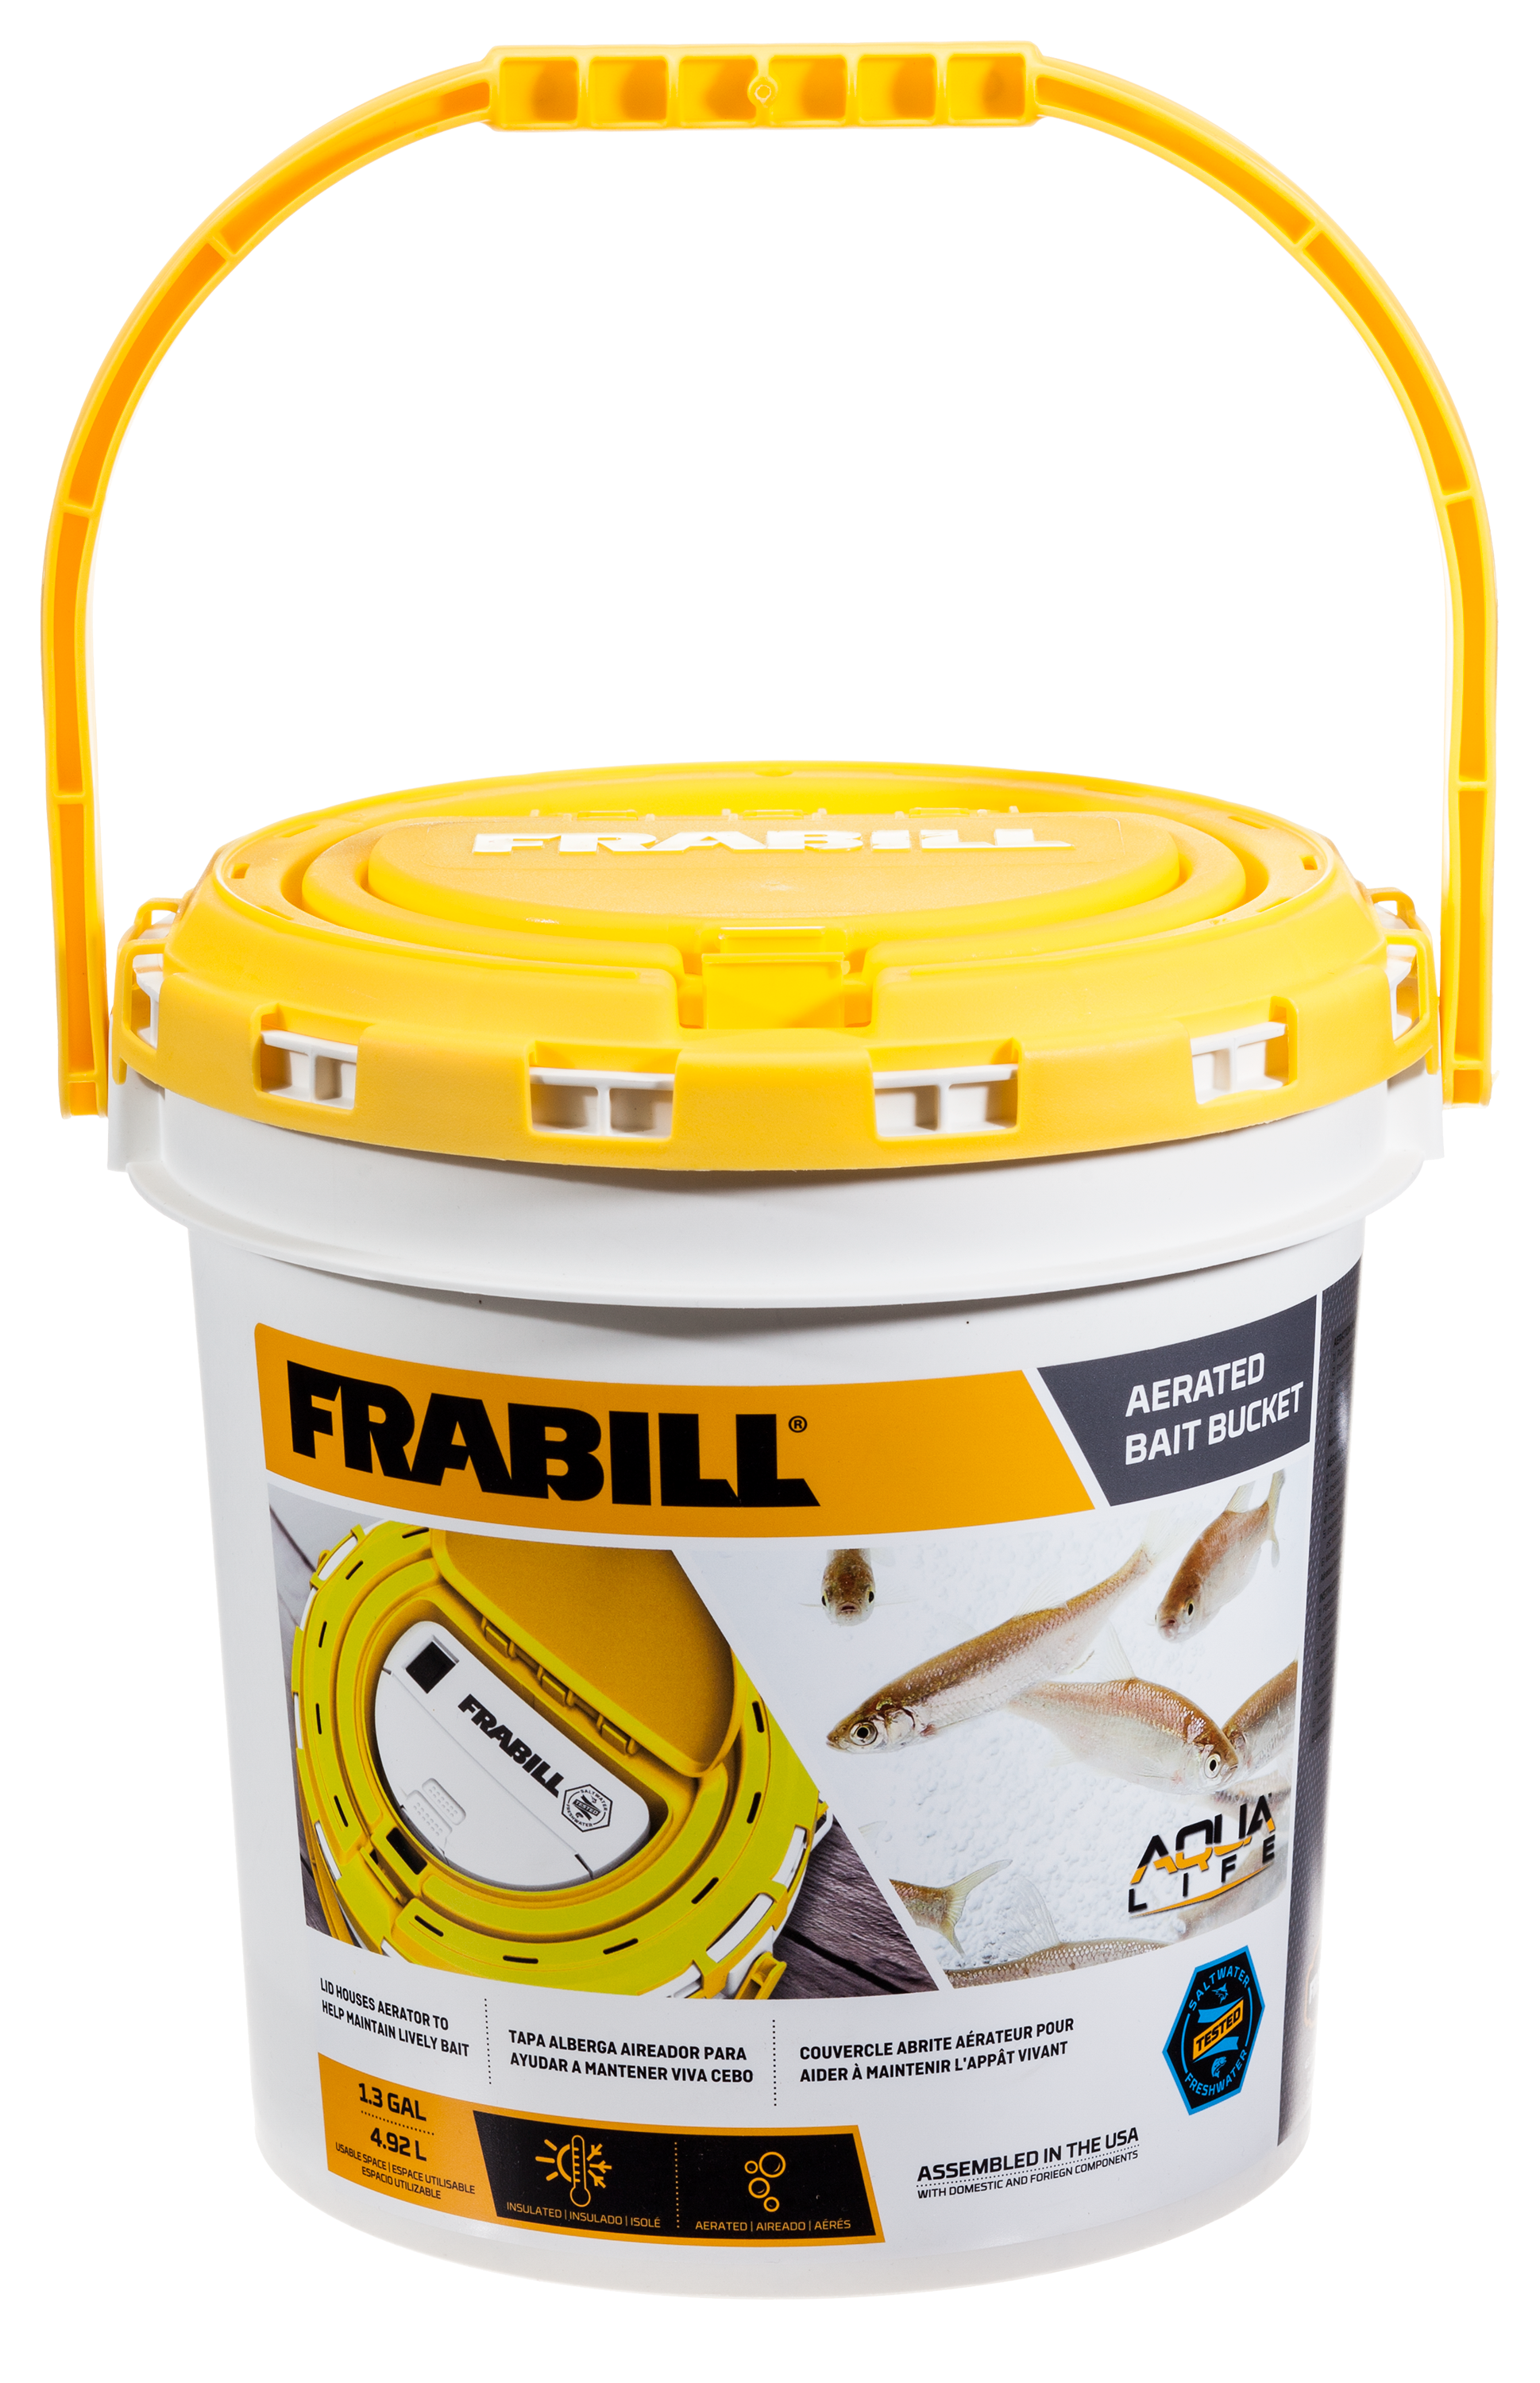 Frabill Dual Bait Bucket with Aerator